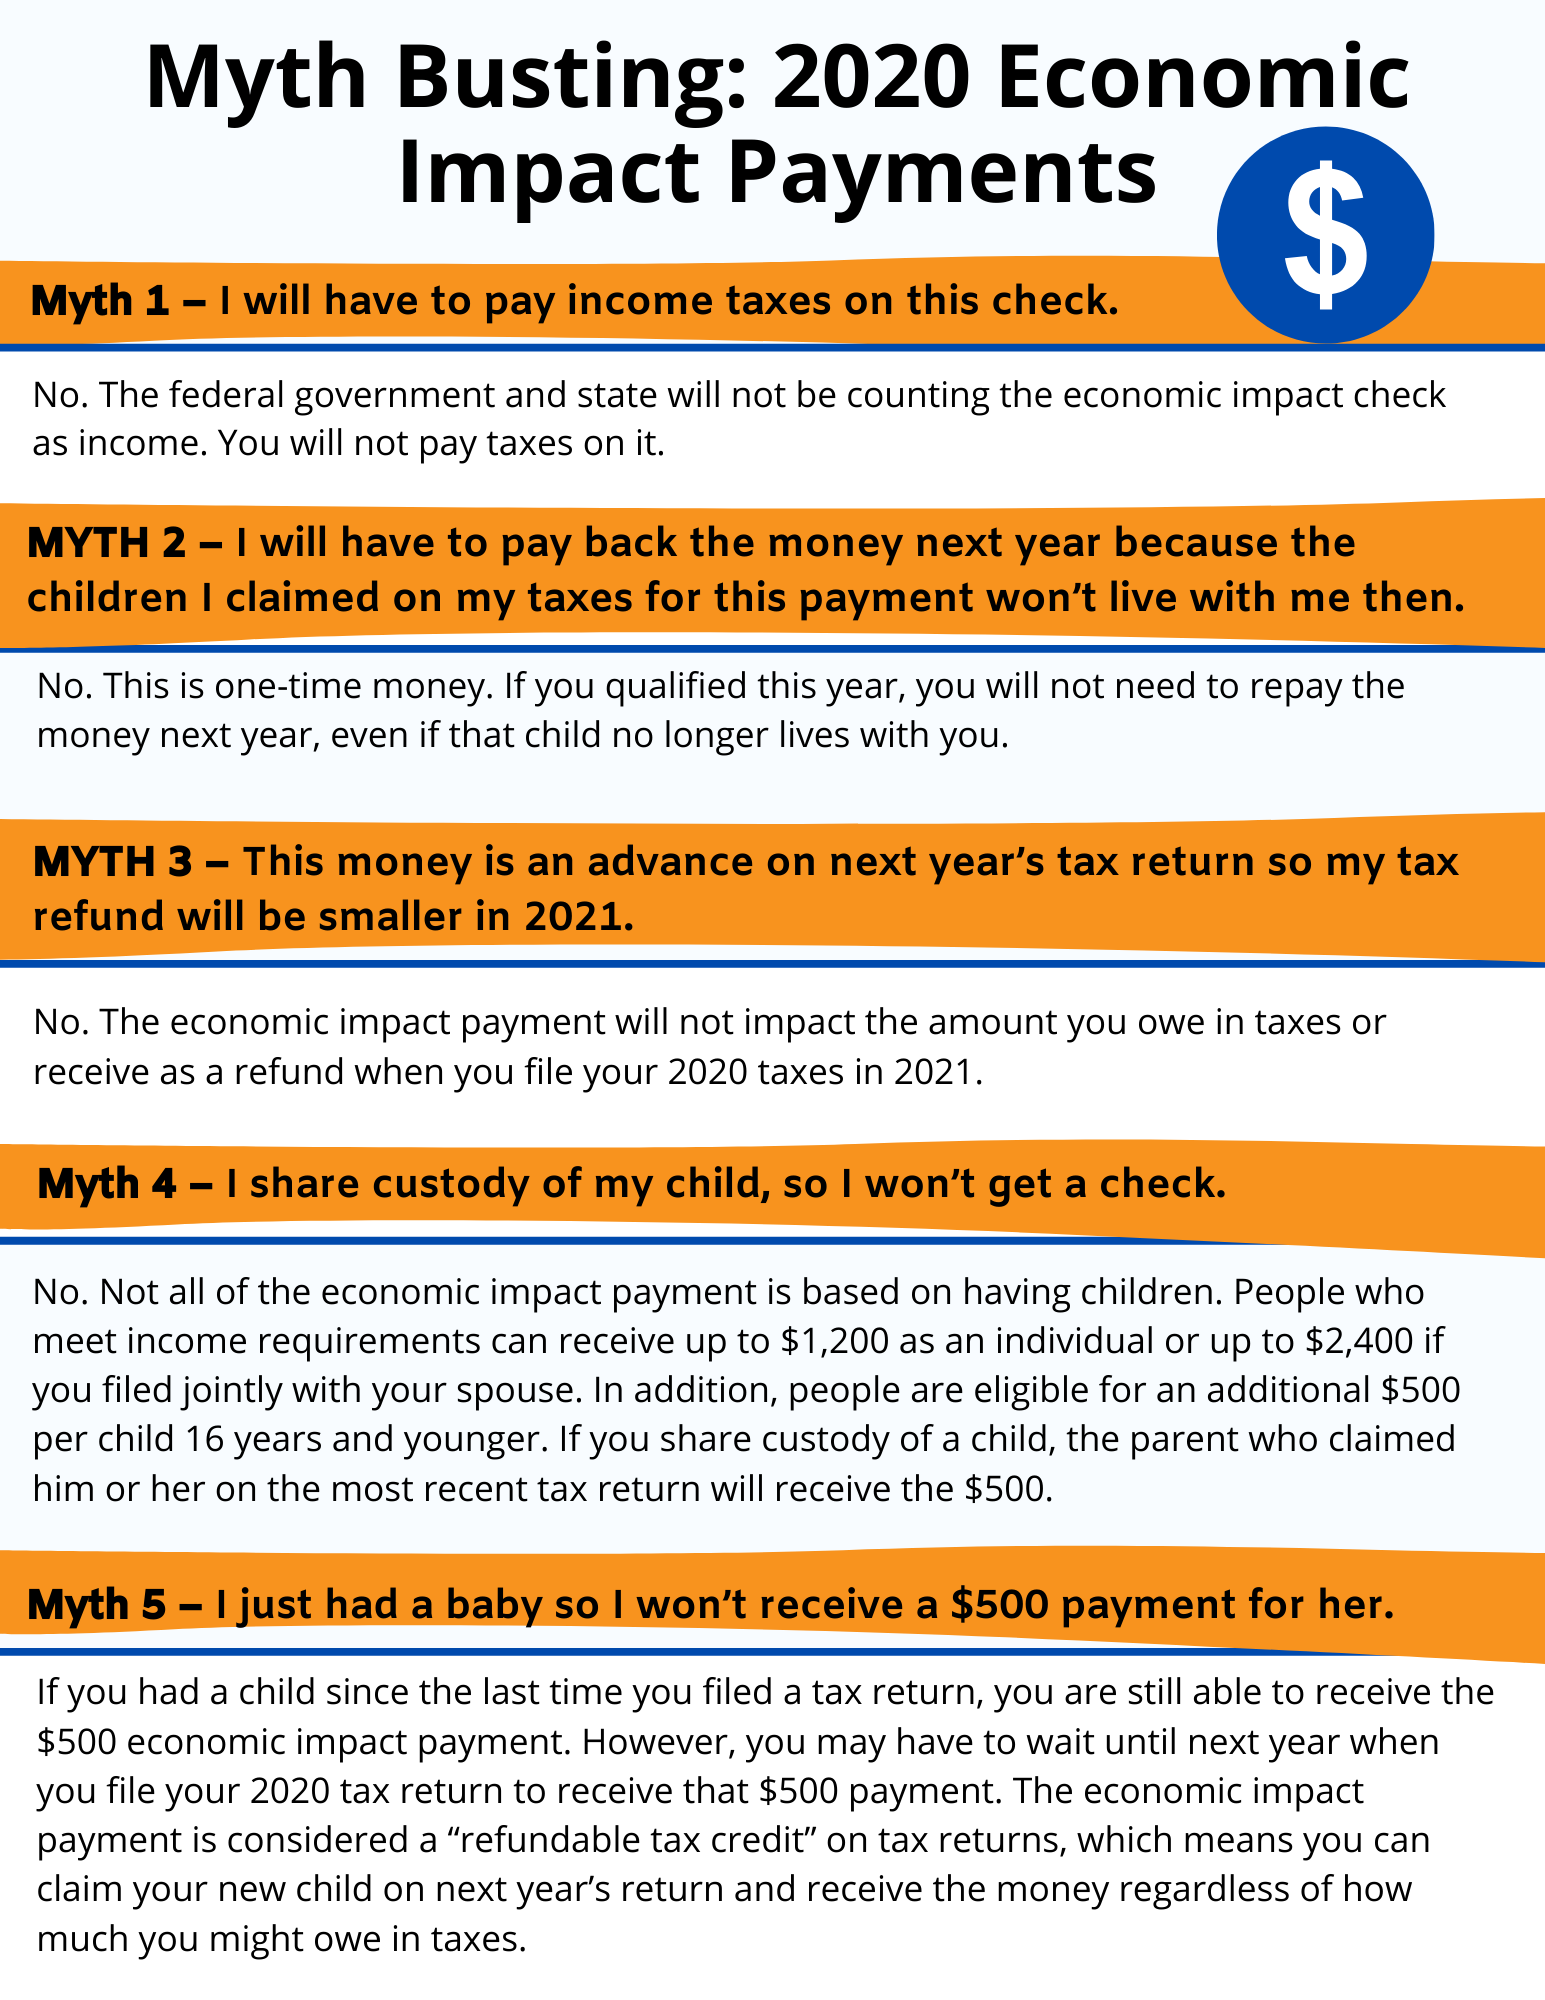 Economic Impact Payment Myth 1-5